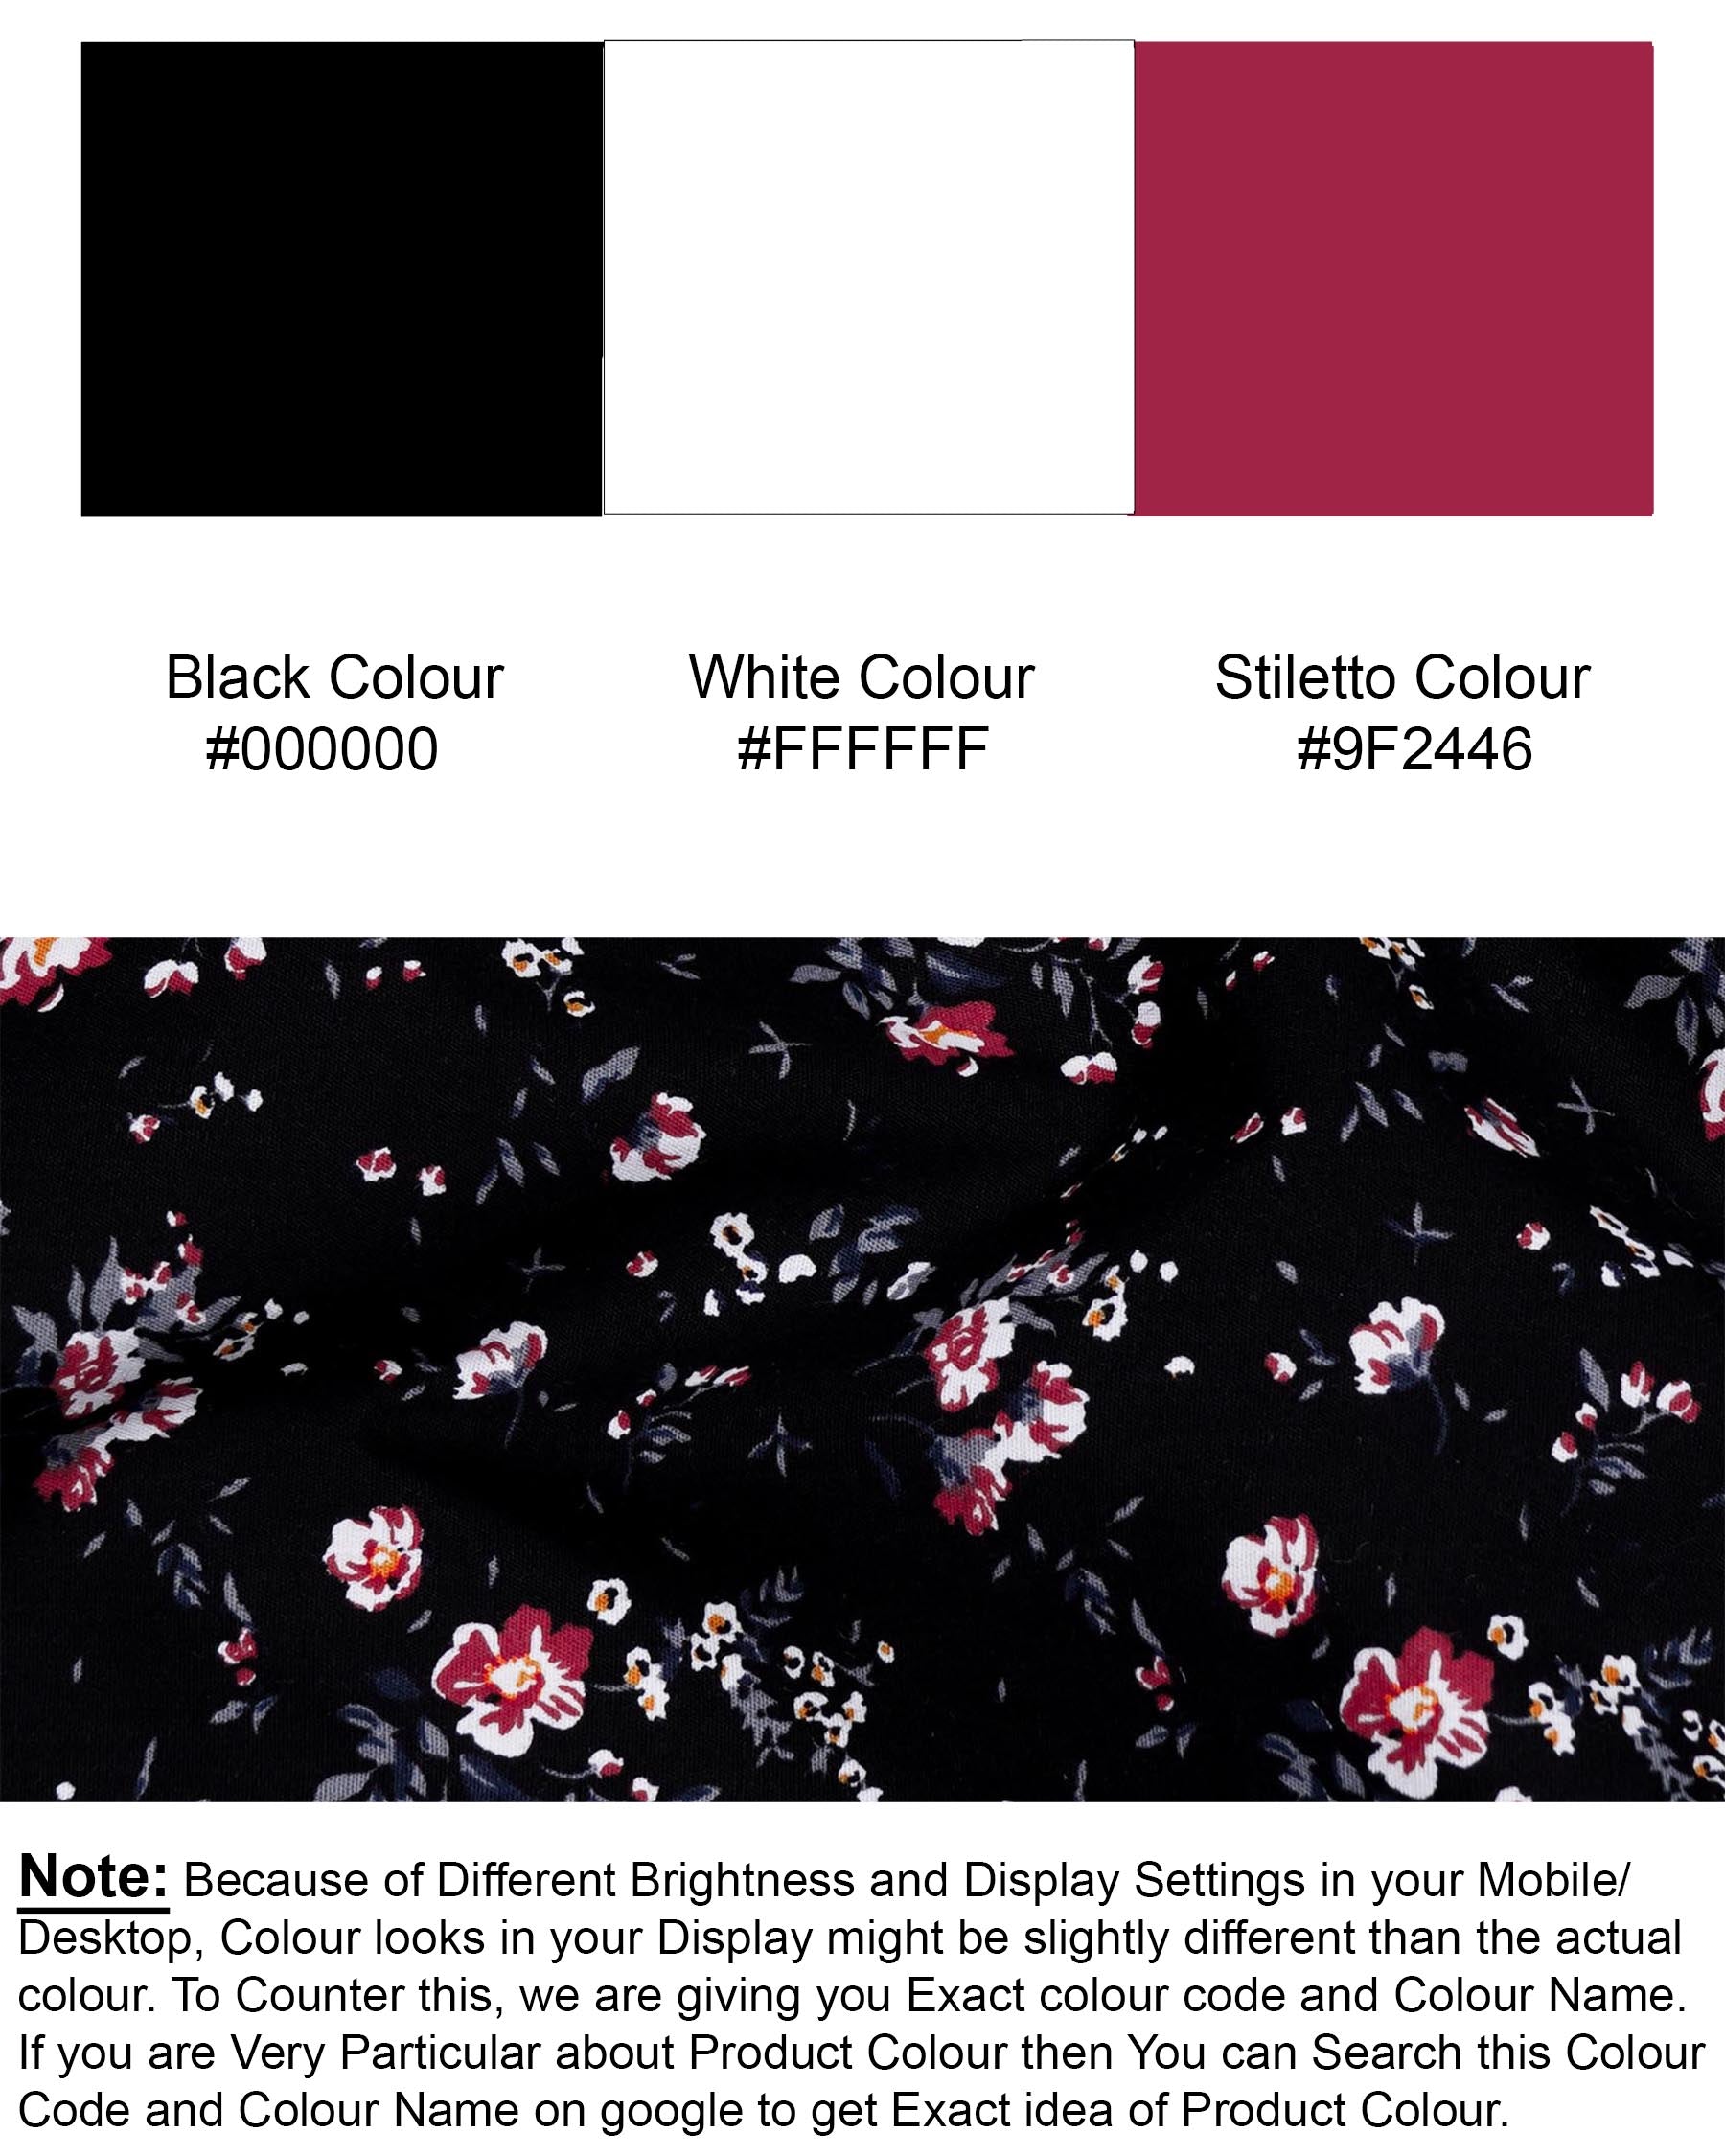 Jade Black Ditzy Floral Printed Twill Premium Cotton Shirt 7571-BLK-38, 7571-BLK-H-38, 7571-BLK-39, 7571-BLK-H-39, 7571-BLK-40, 7571-BLK-H-40, 7571-BLK-42, 7571-BLK-H-42, 7571-BLK-44, 7571-BLK-H-44, 7571-BLK-46, 7571-BLK-H-46, 7571-BLK-48, 7571-BLK-H-48, 7571-BLK-50, 7571-BLK-H-50, 7571-BLK-52, 7571-BLK-H-52